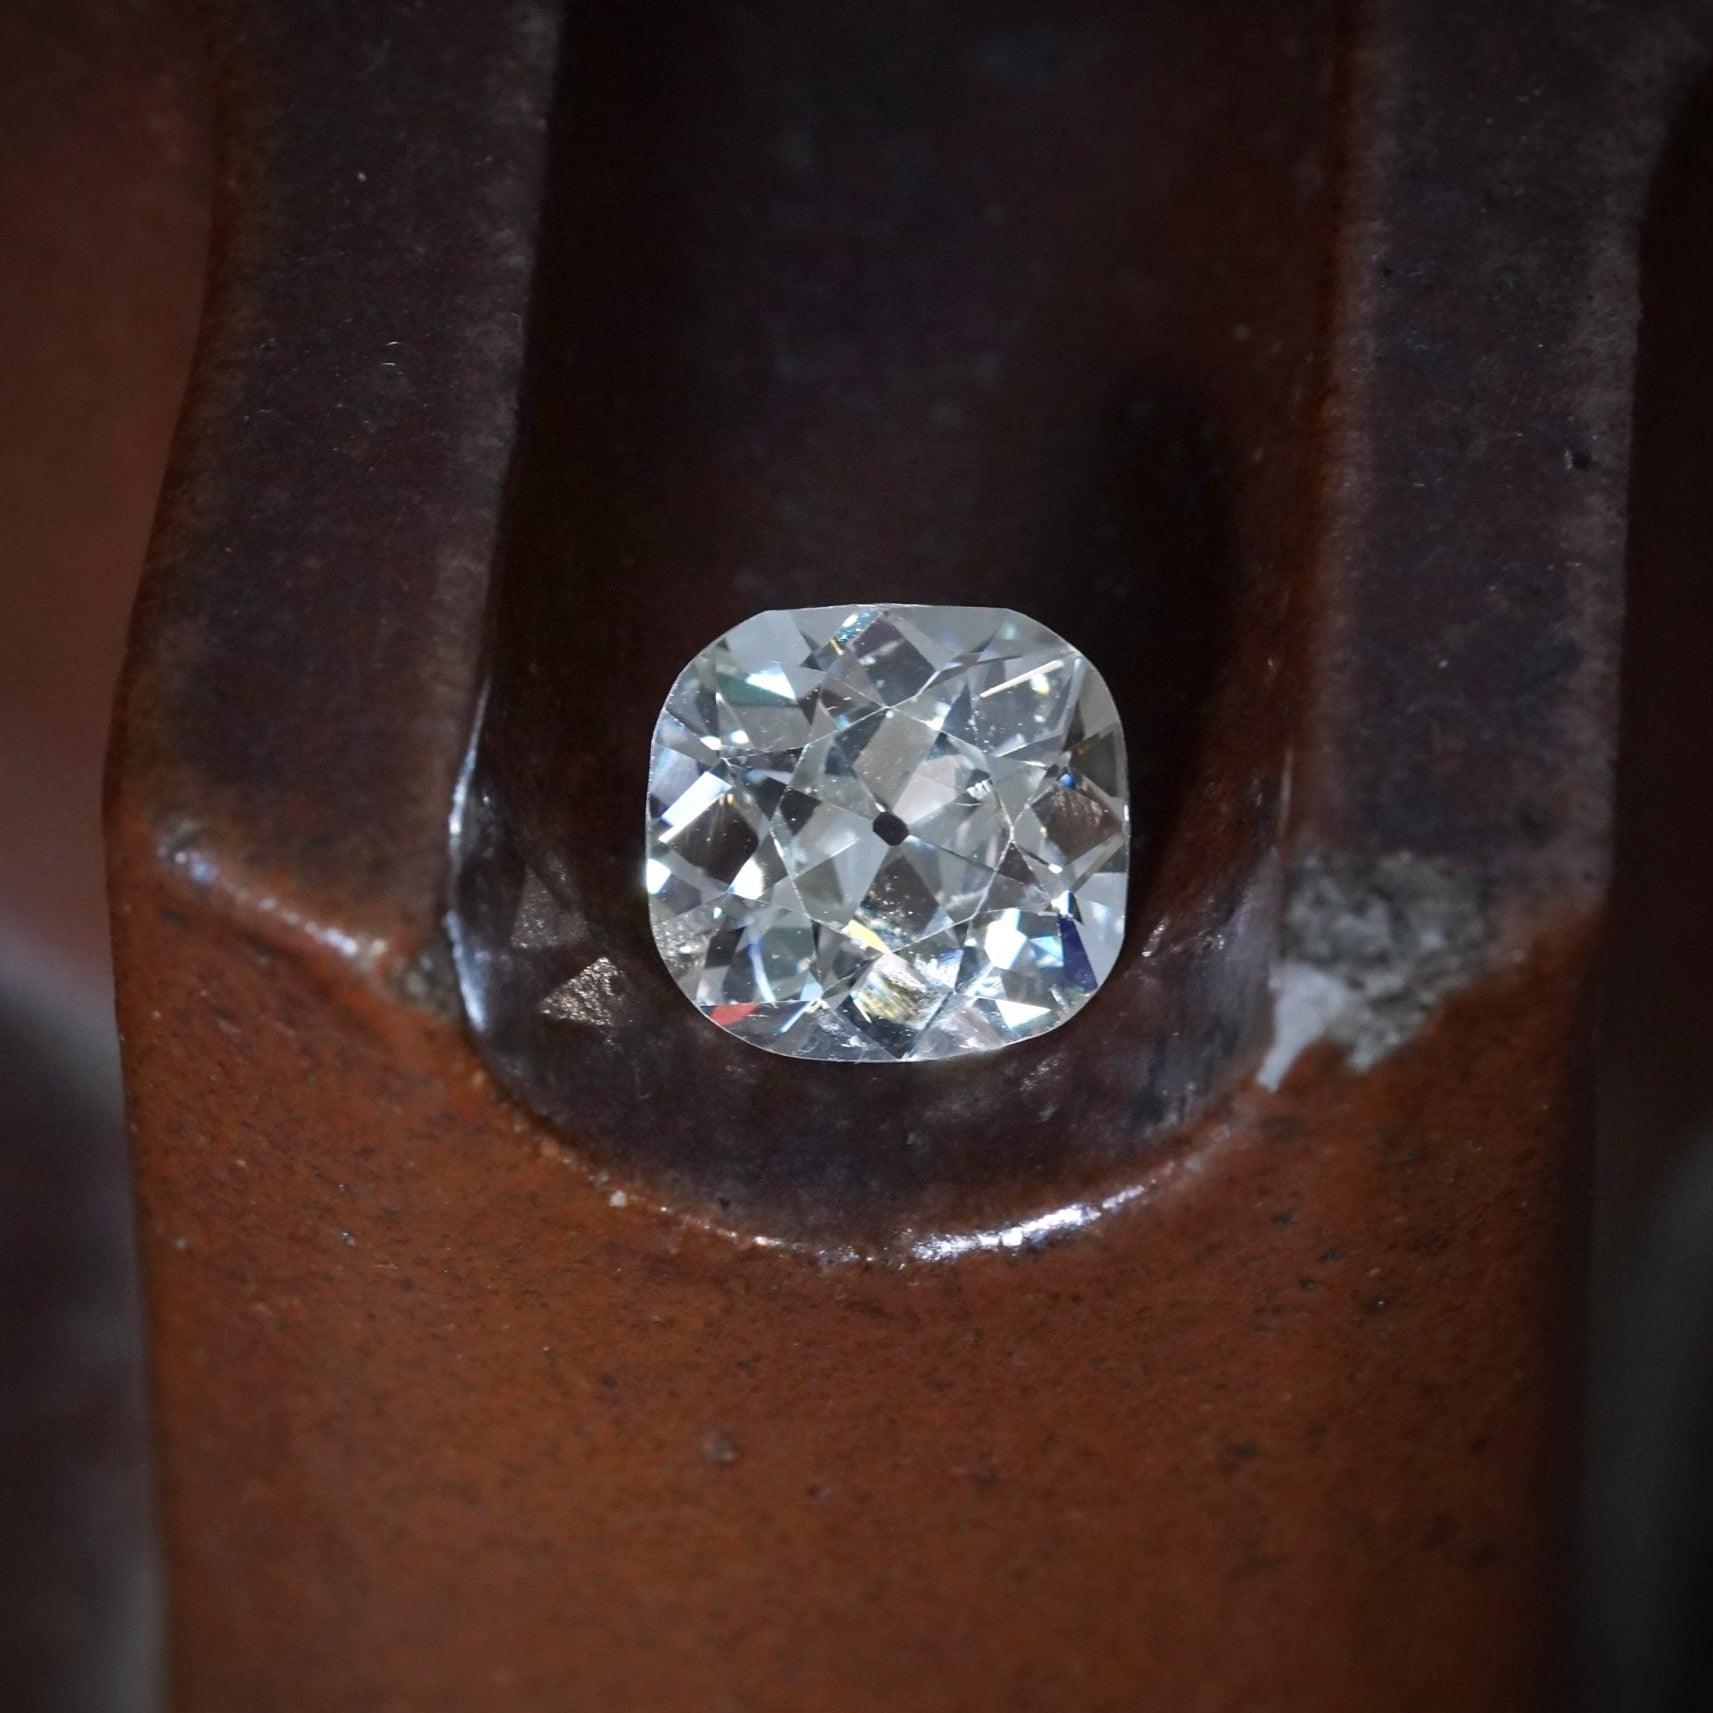 3.79-Carat Old Mine Cut Diamond by Jogani - Front View